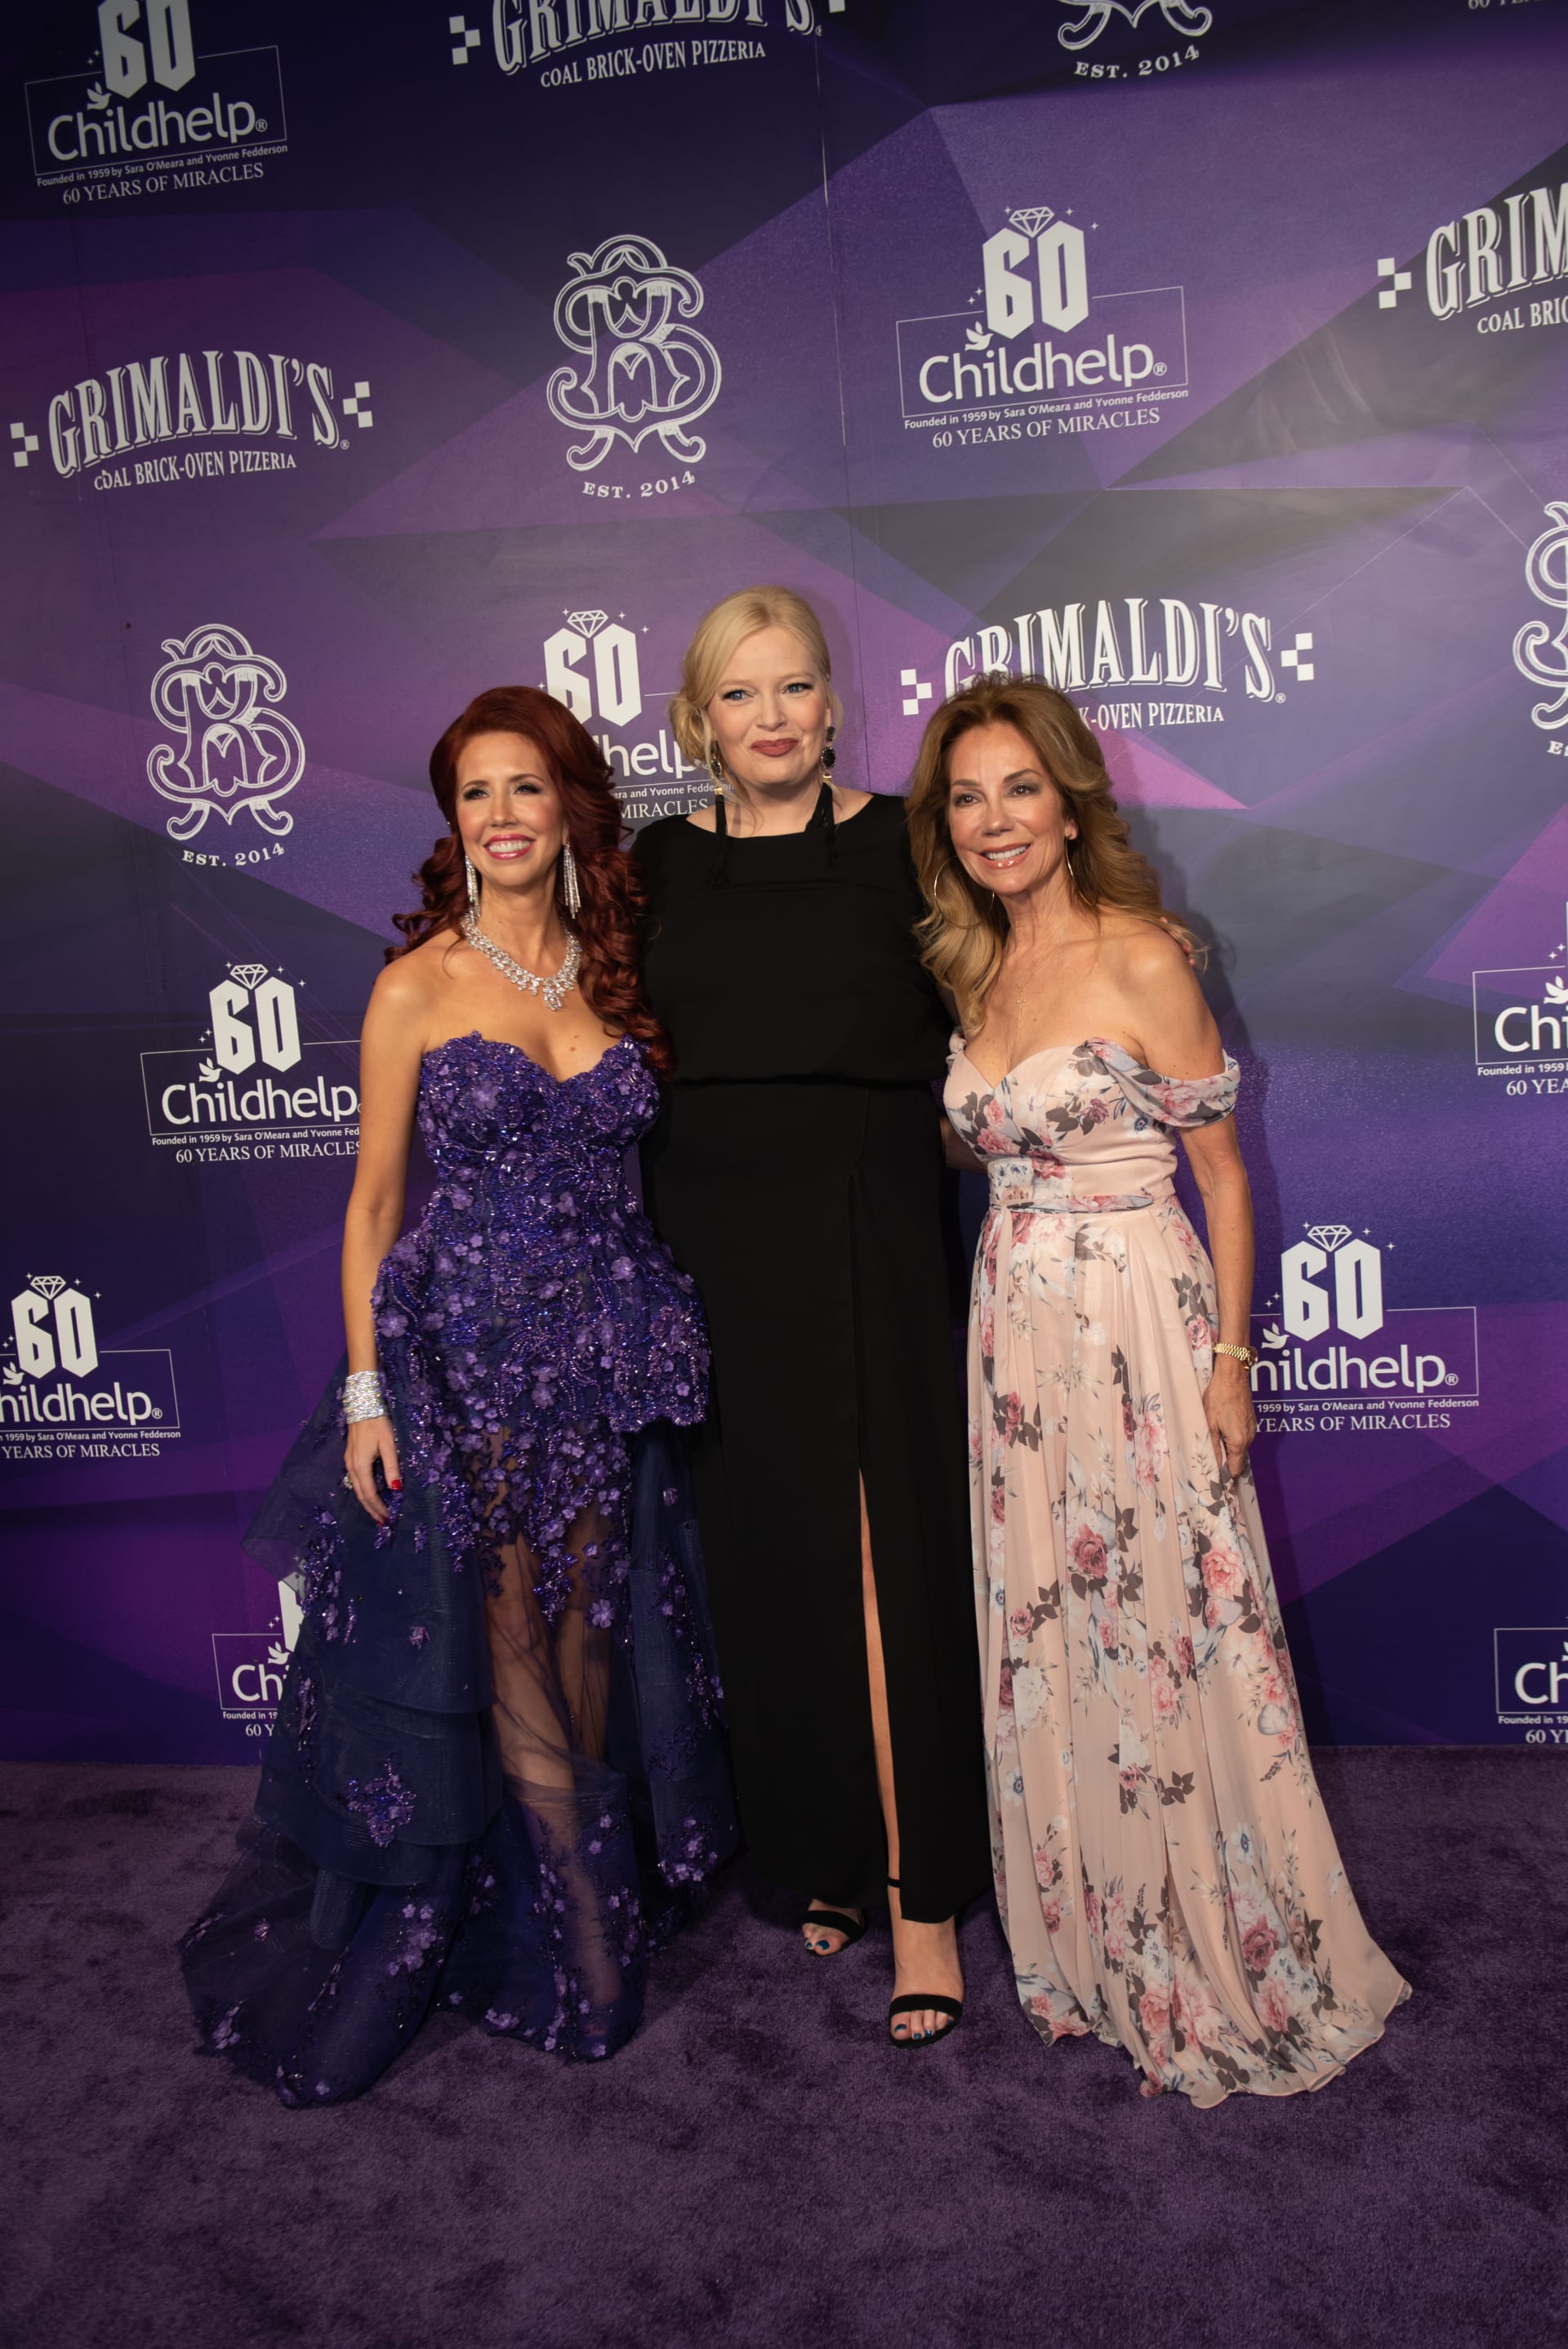 Kathie Lee Gifford, Megyn Kelly, other stars shine at Childhelp gala